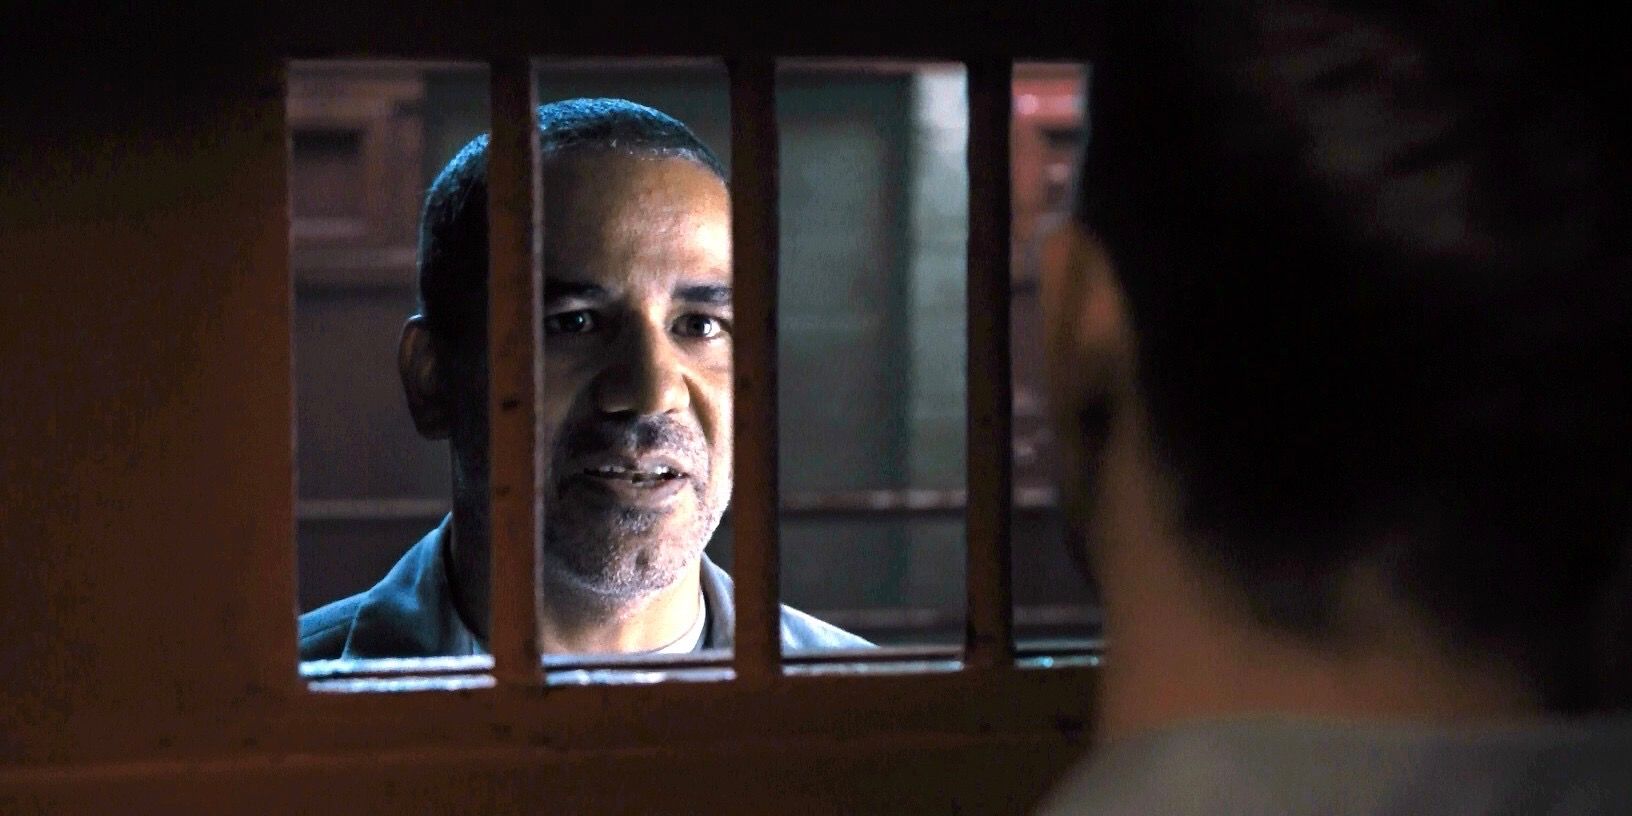 Drug lord Arturo Braga gets jailed in Fast & Furious (2009) 